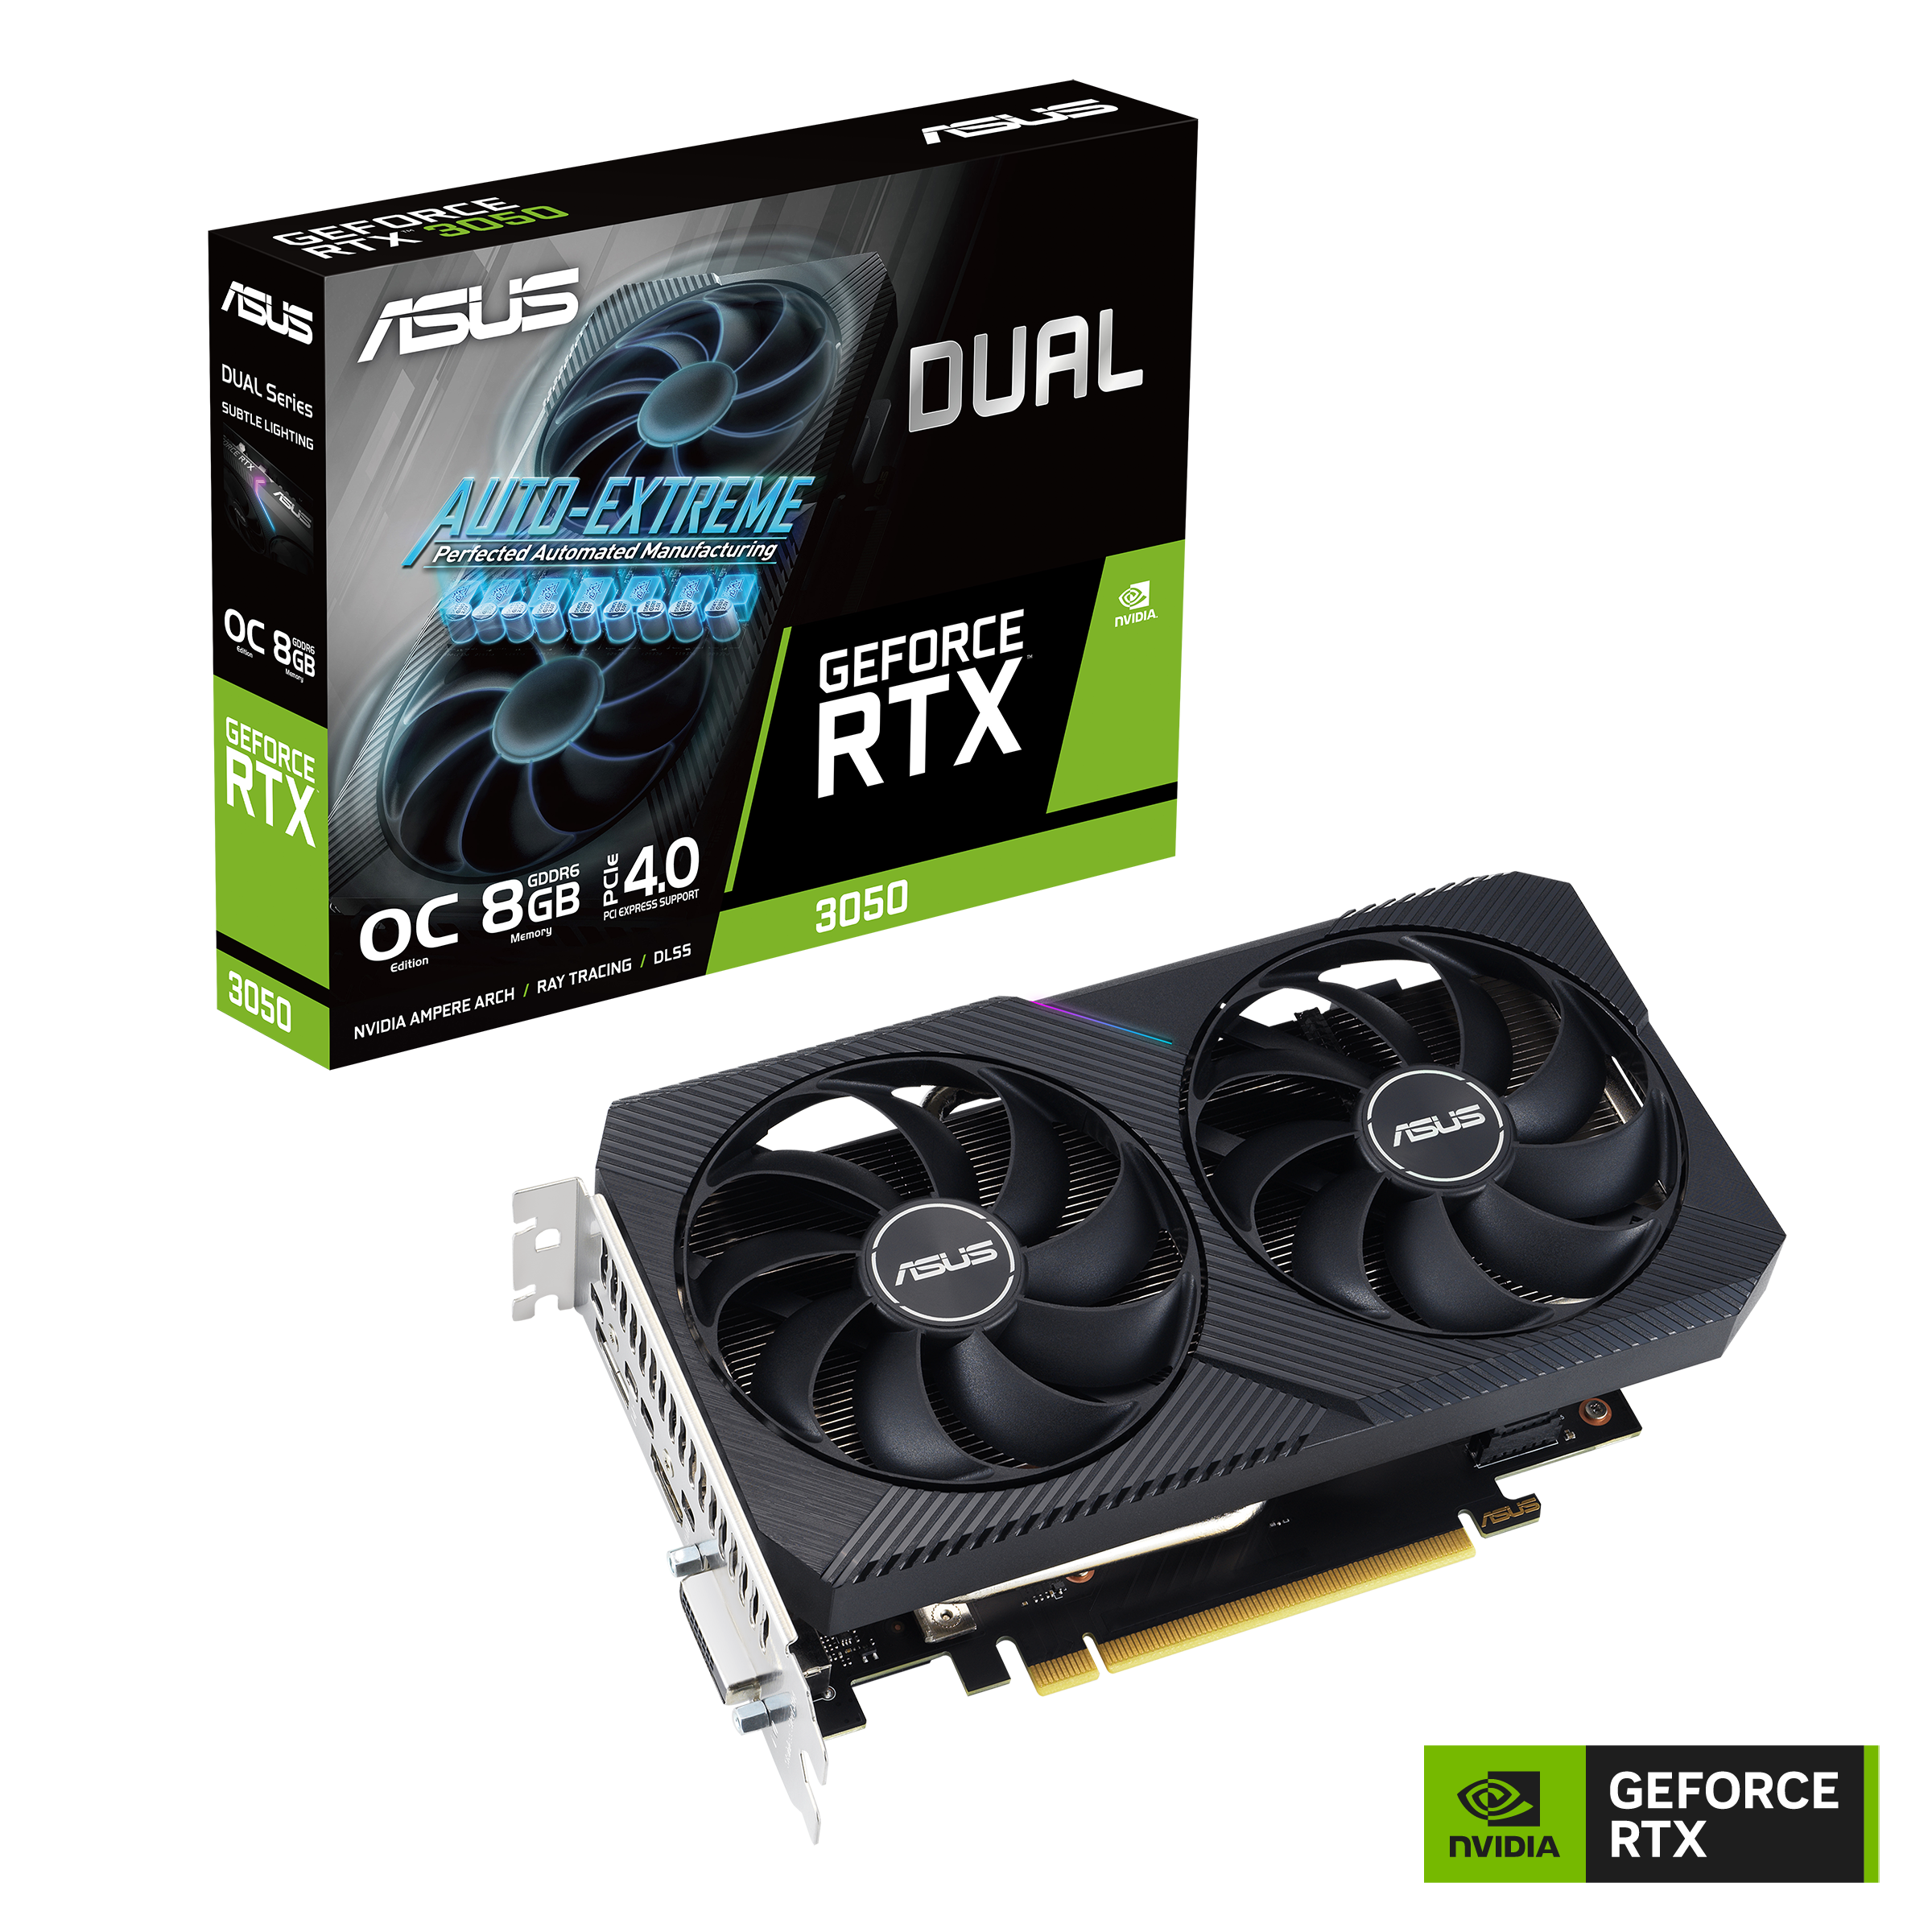 ASUS Dual GeForce RTX 3050 V2 OC Edition 8GB GDDR6 | Graphics Card